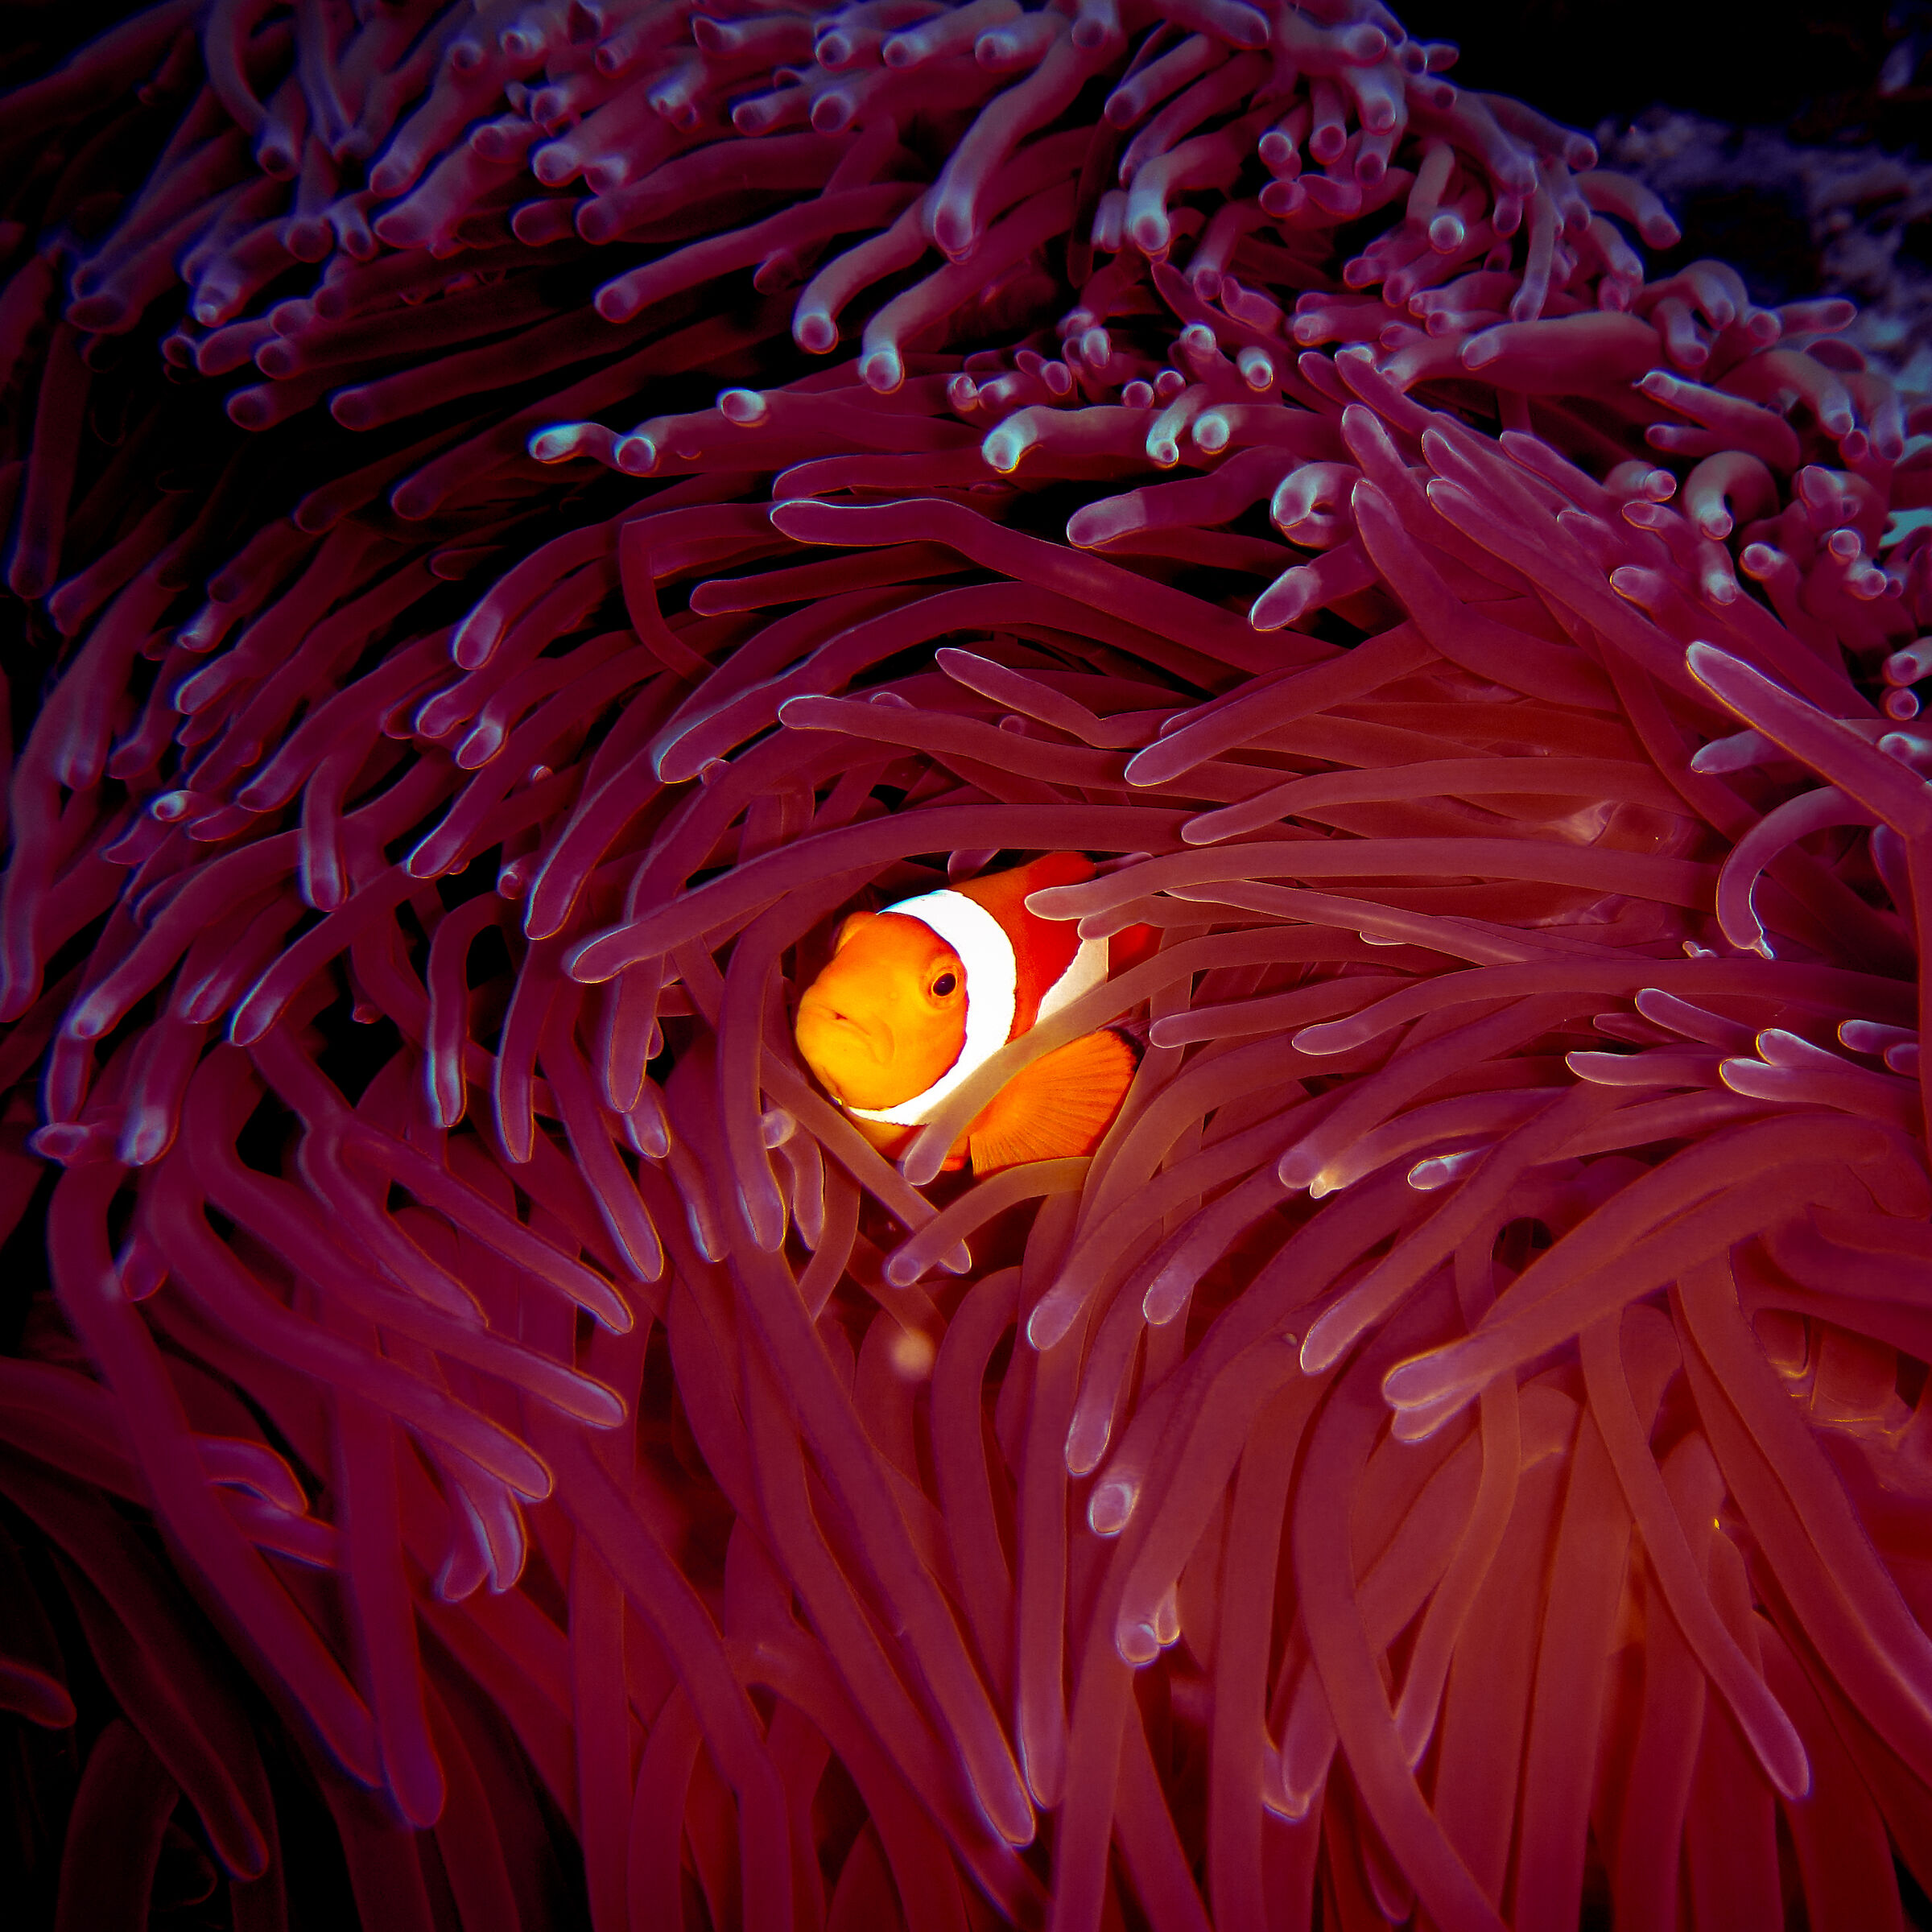 Finally find Nemo...